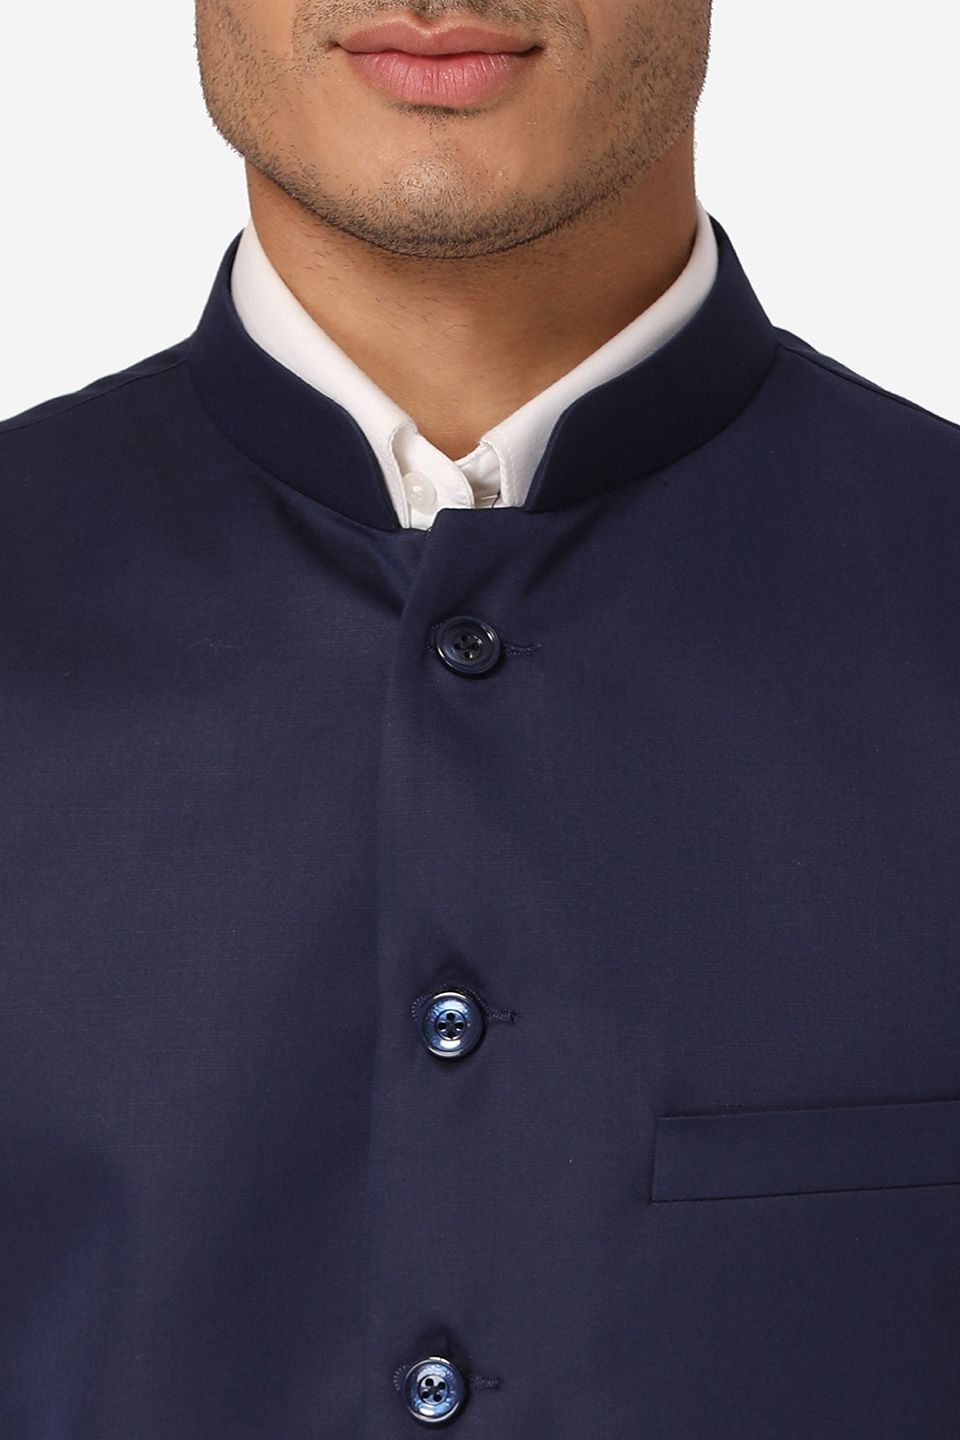 Wintage Men's Poly Cotton Festive and Casual Nehru Jacket Vest Waistcoat : Navy Blue